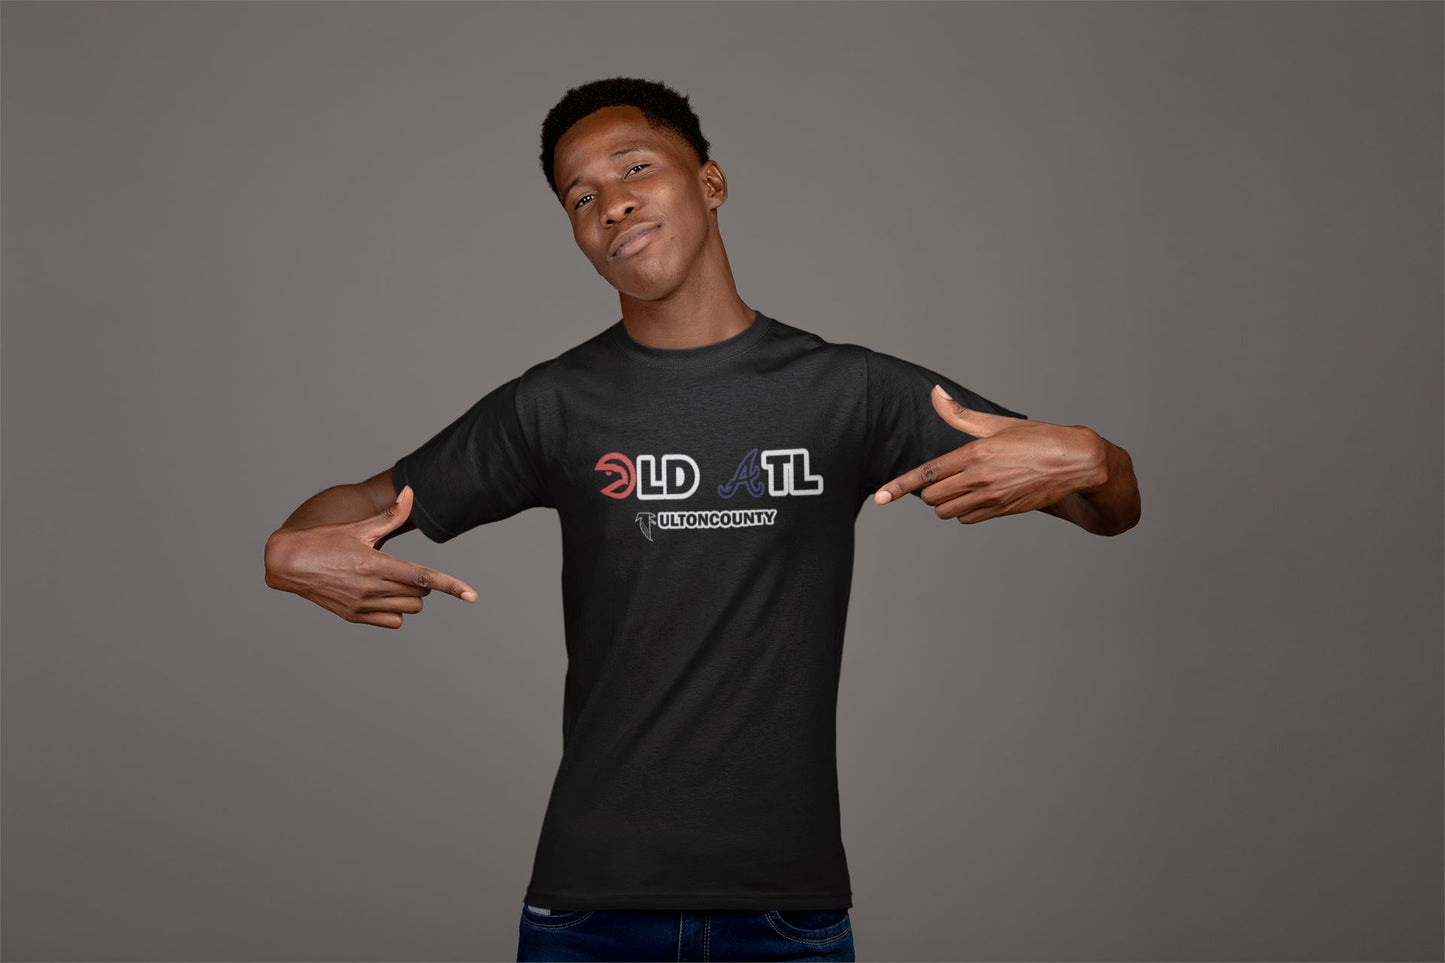 Old Atl T-Shirt, Sports Themed T-Shirt (Inspired by Atlanta Sports) B1ack By Design LLC S Black 